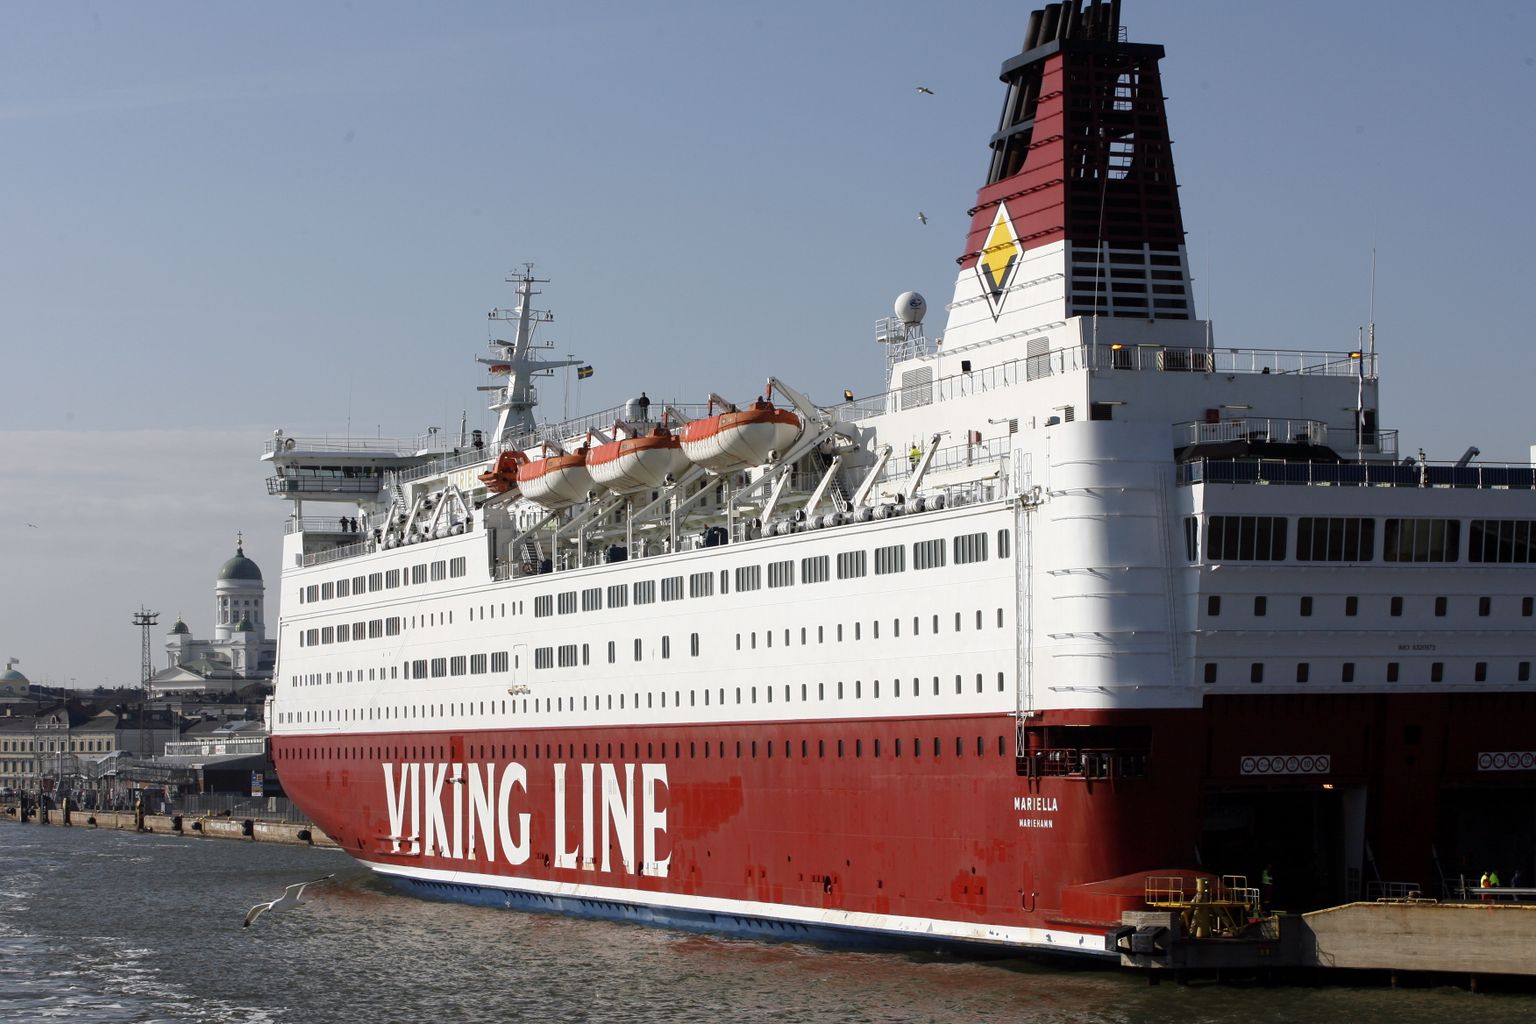 Viking Line'i reisilaev Mariella.